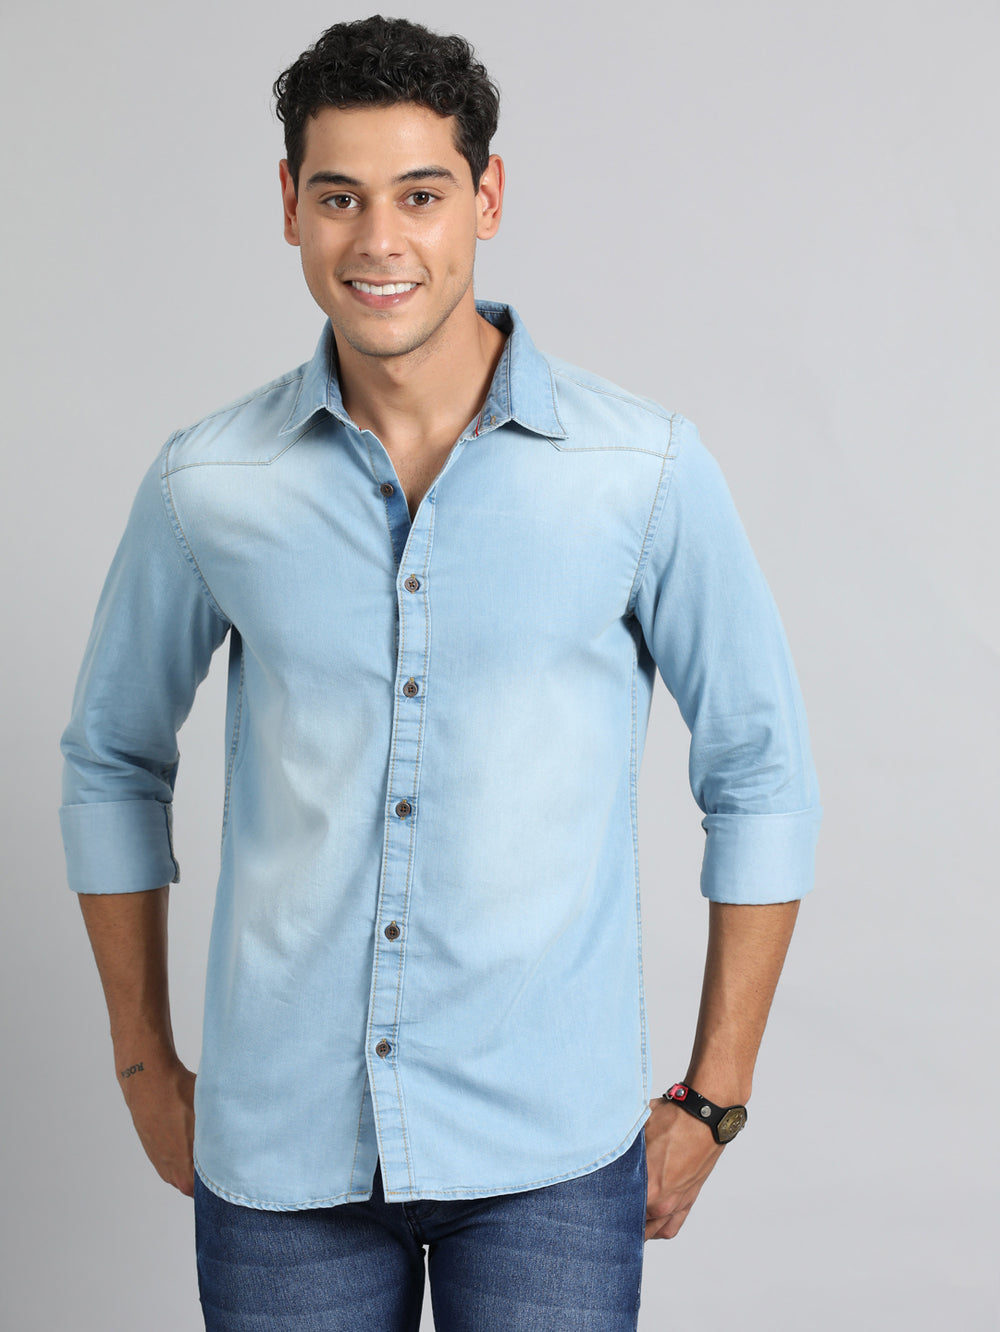 Slate Blue Solid Denim Shirt Solid Shirt Bushirt   